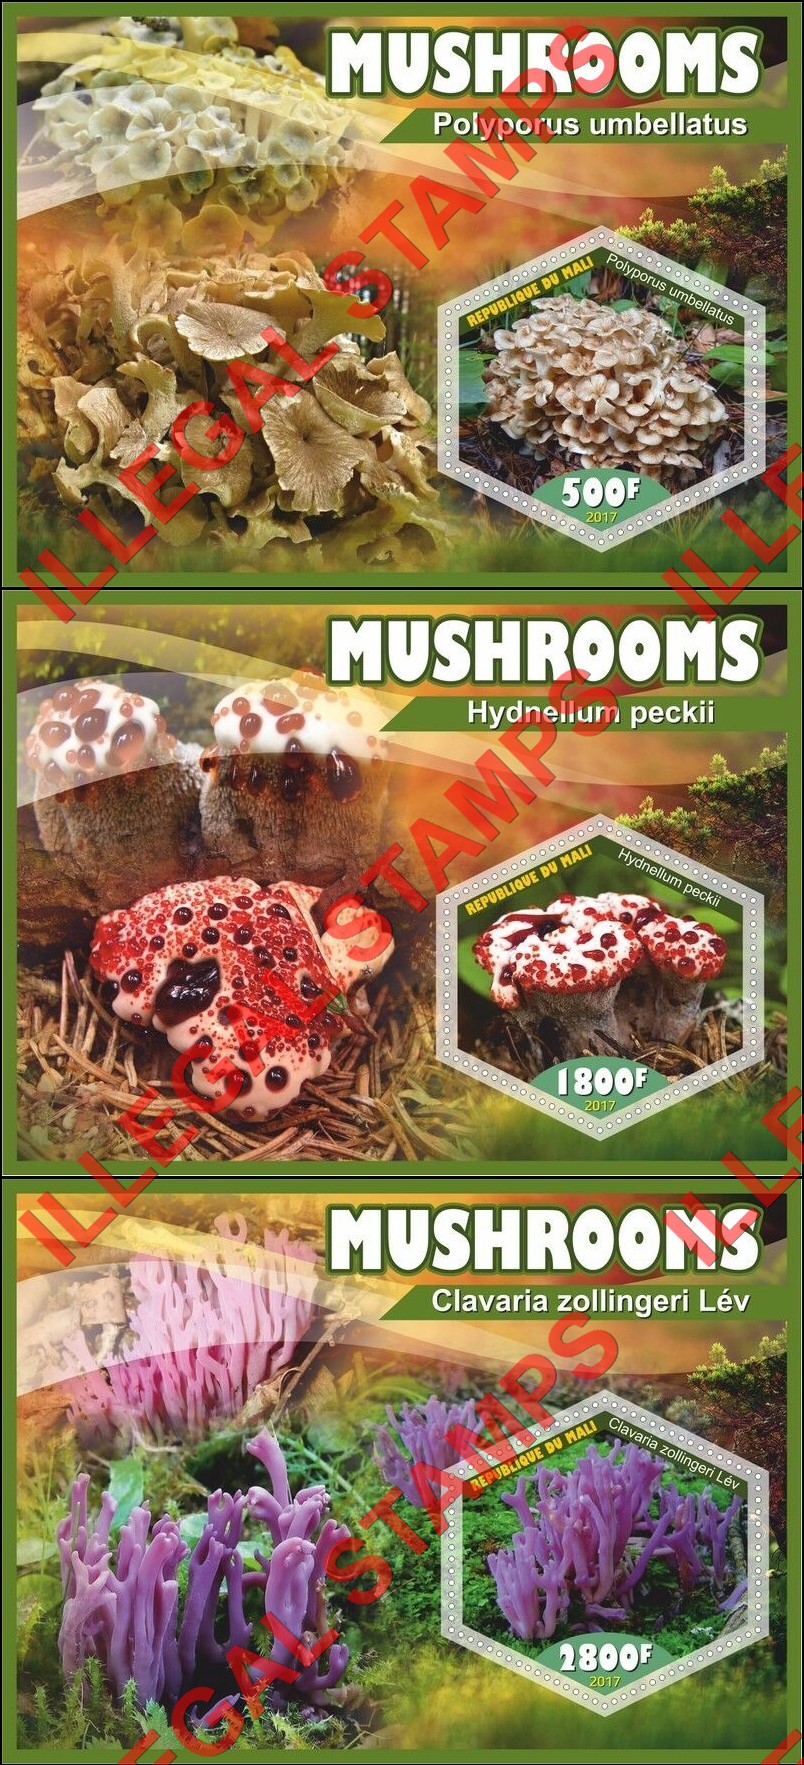 Mali 2017 Mushrooms Illegal Stamp Souvenir Sheets of 1 (Part 2)